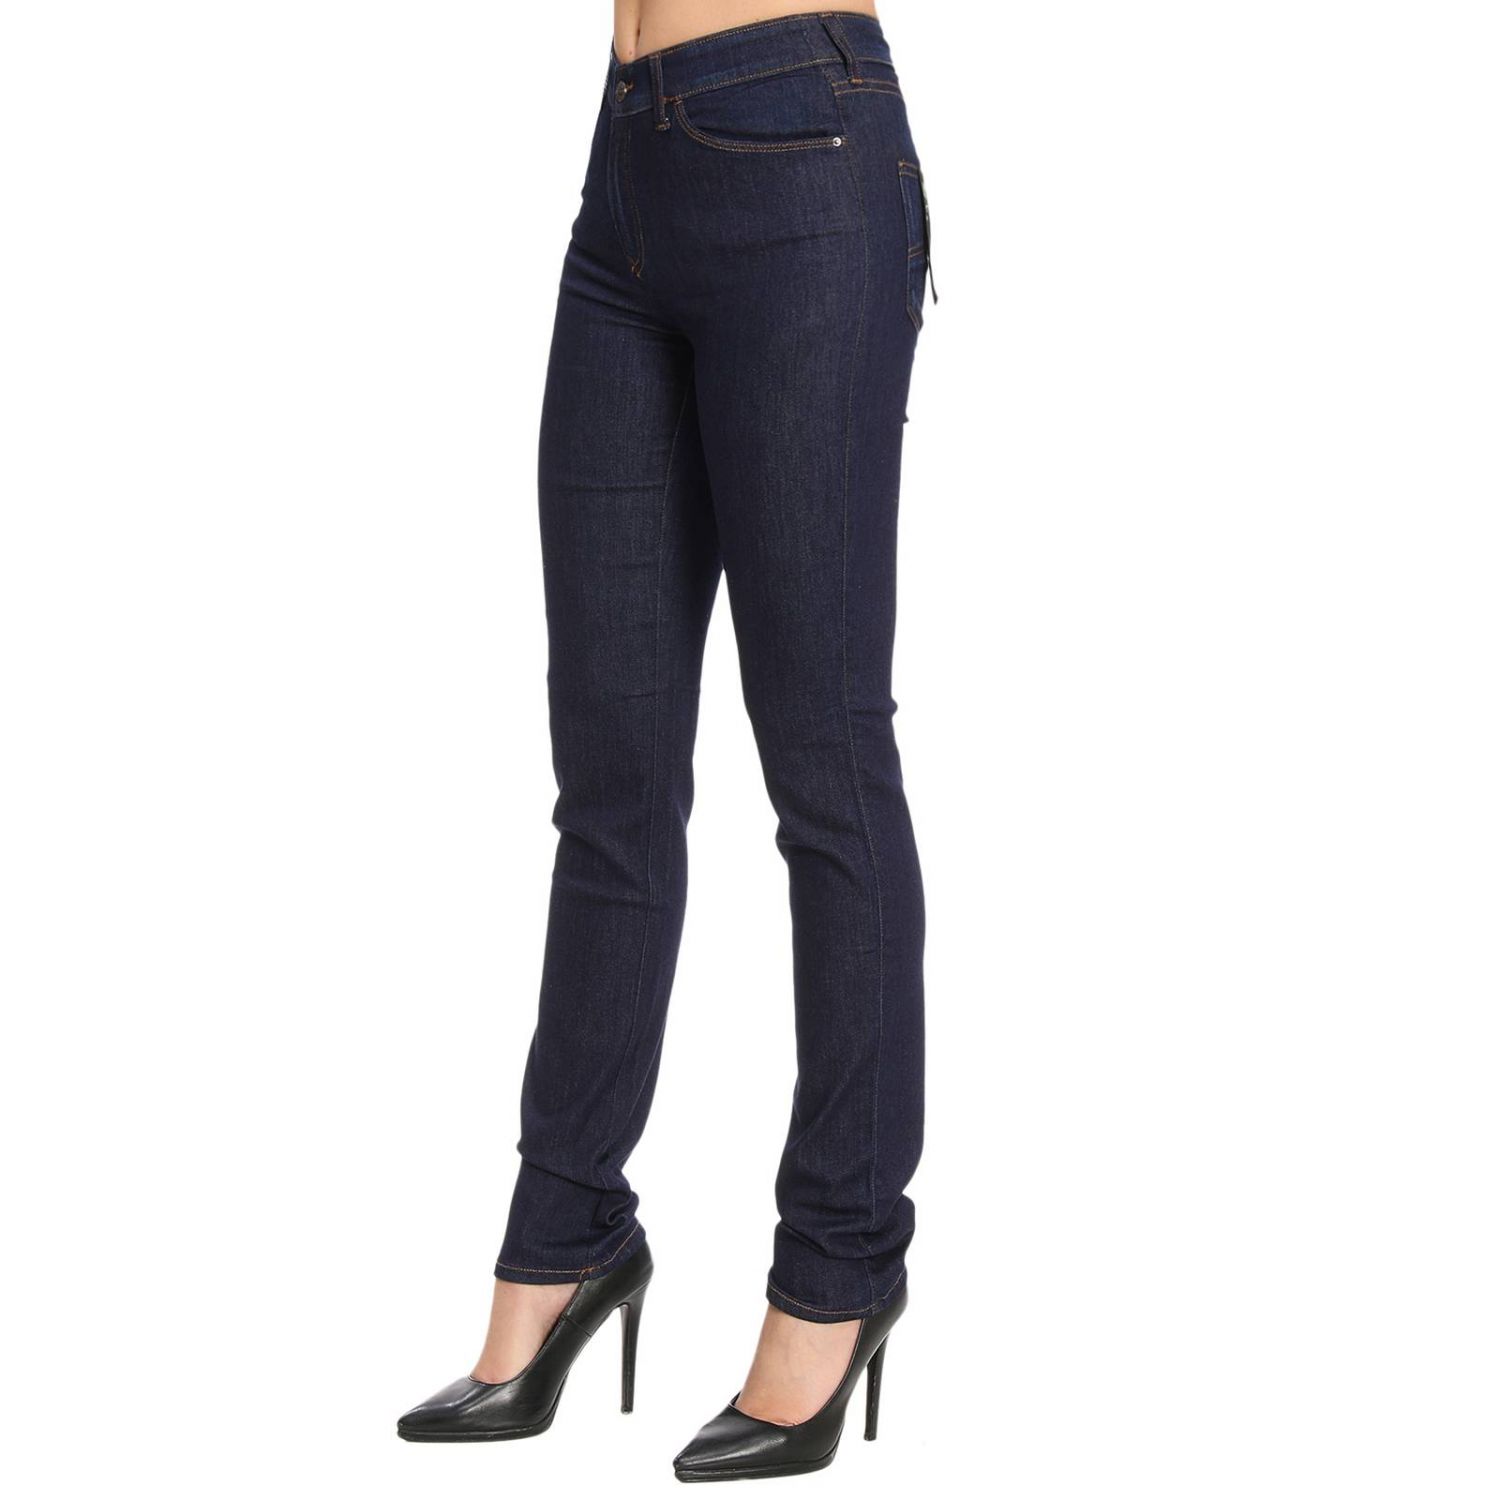 Emporio Armani Outlet: Jeans women | Jeans Emporio Armani Women Gnawed ...